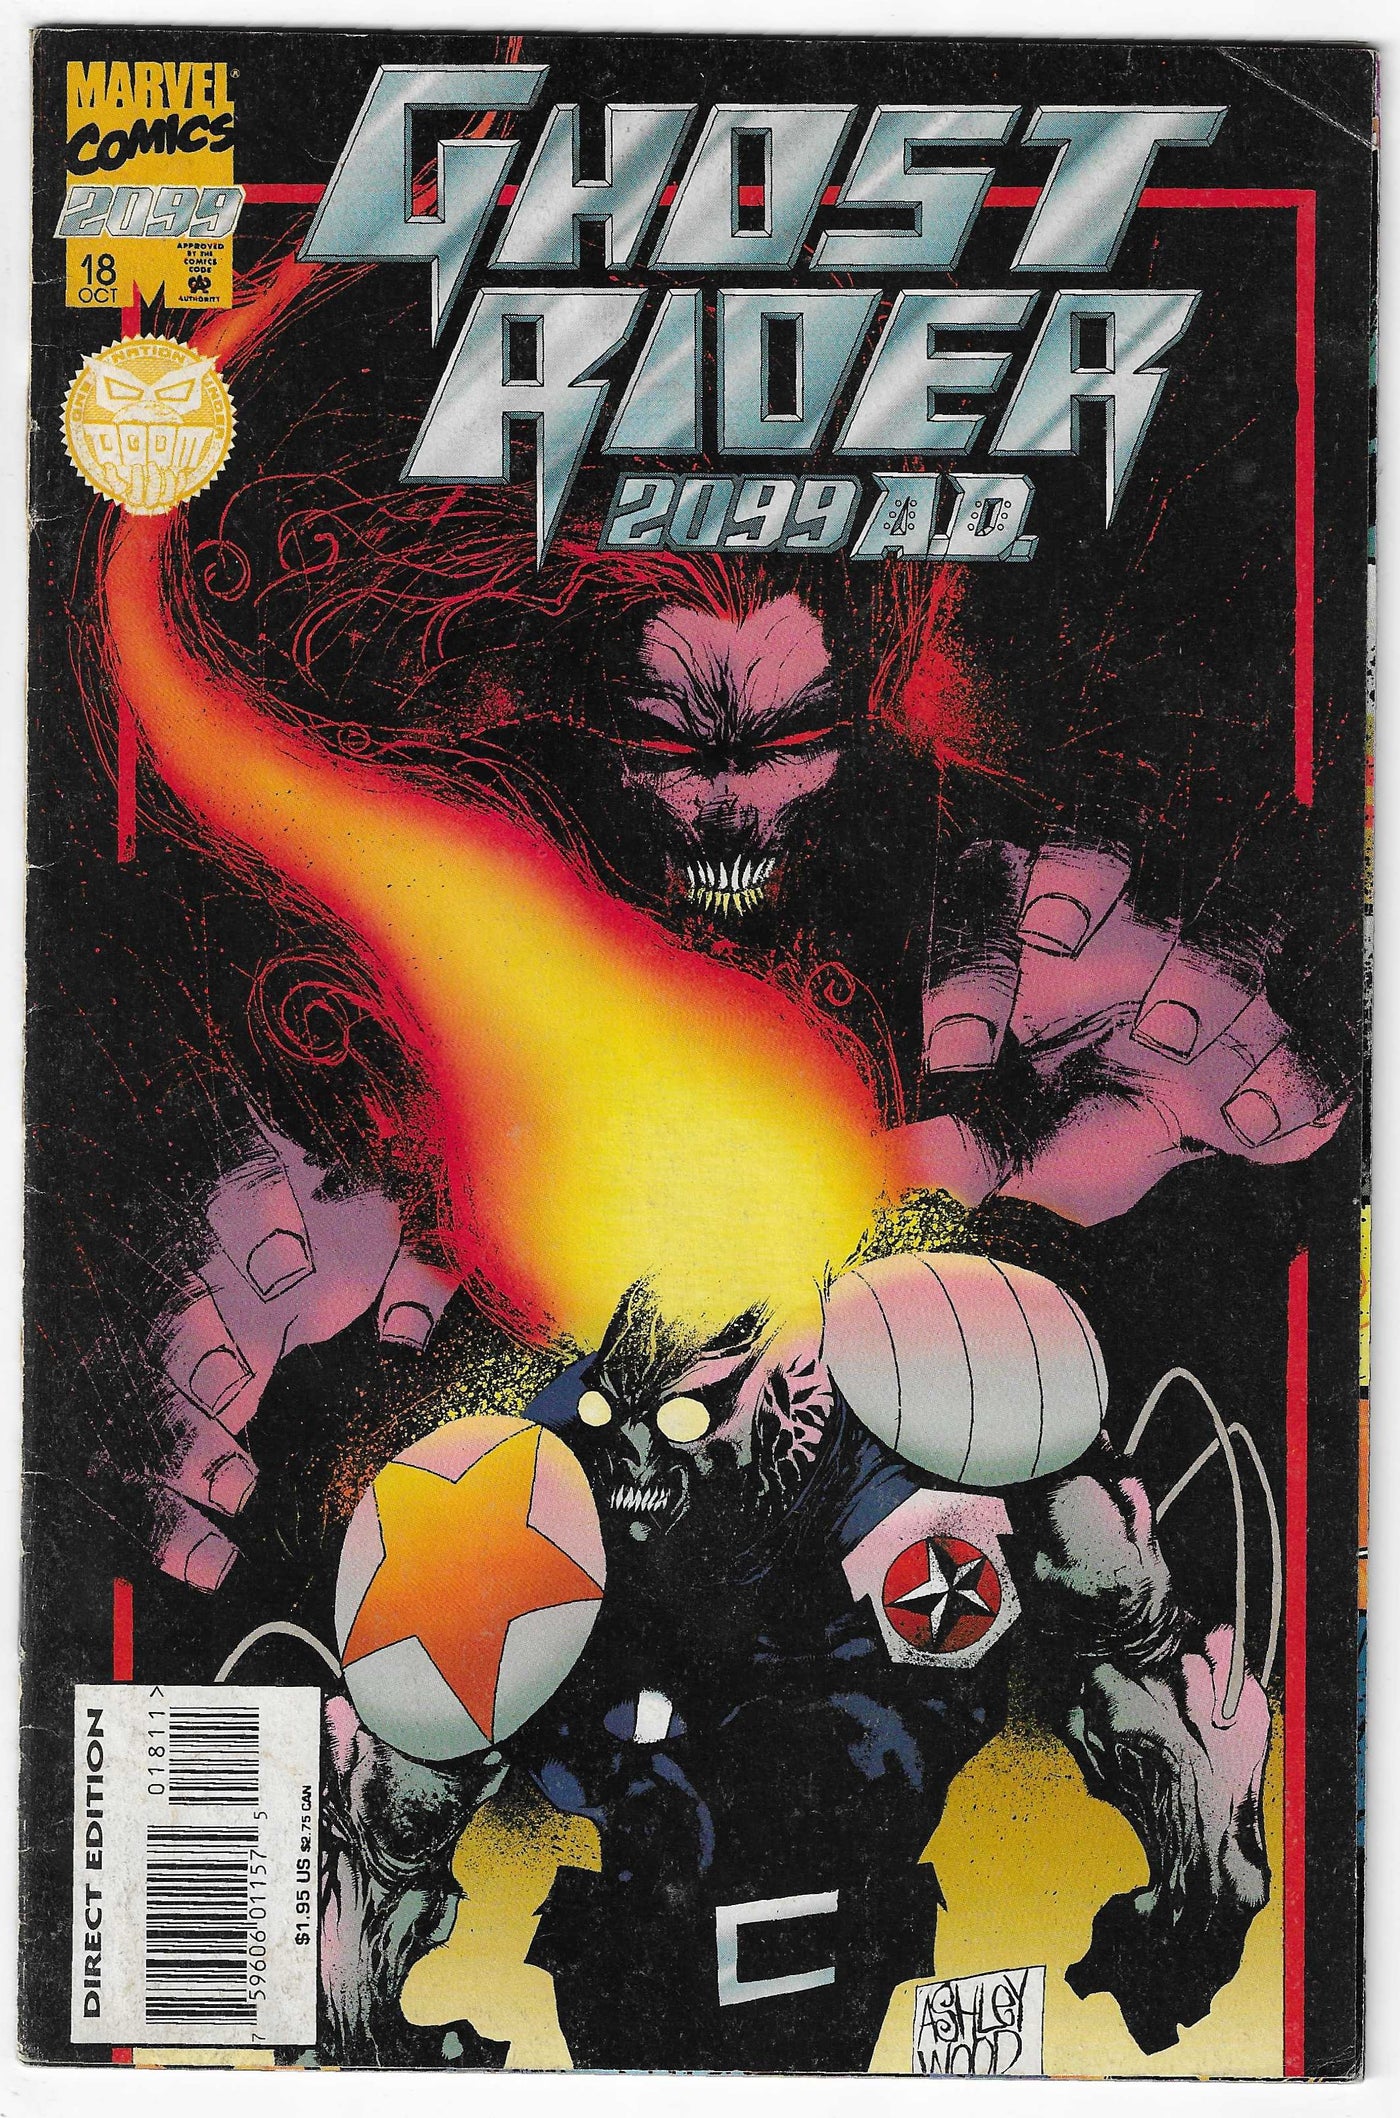 Ghost Rider 2099 A.D. (Volume 1) #18